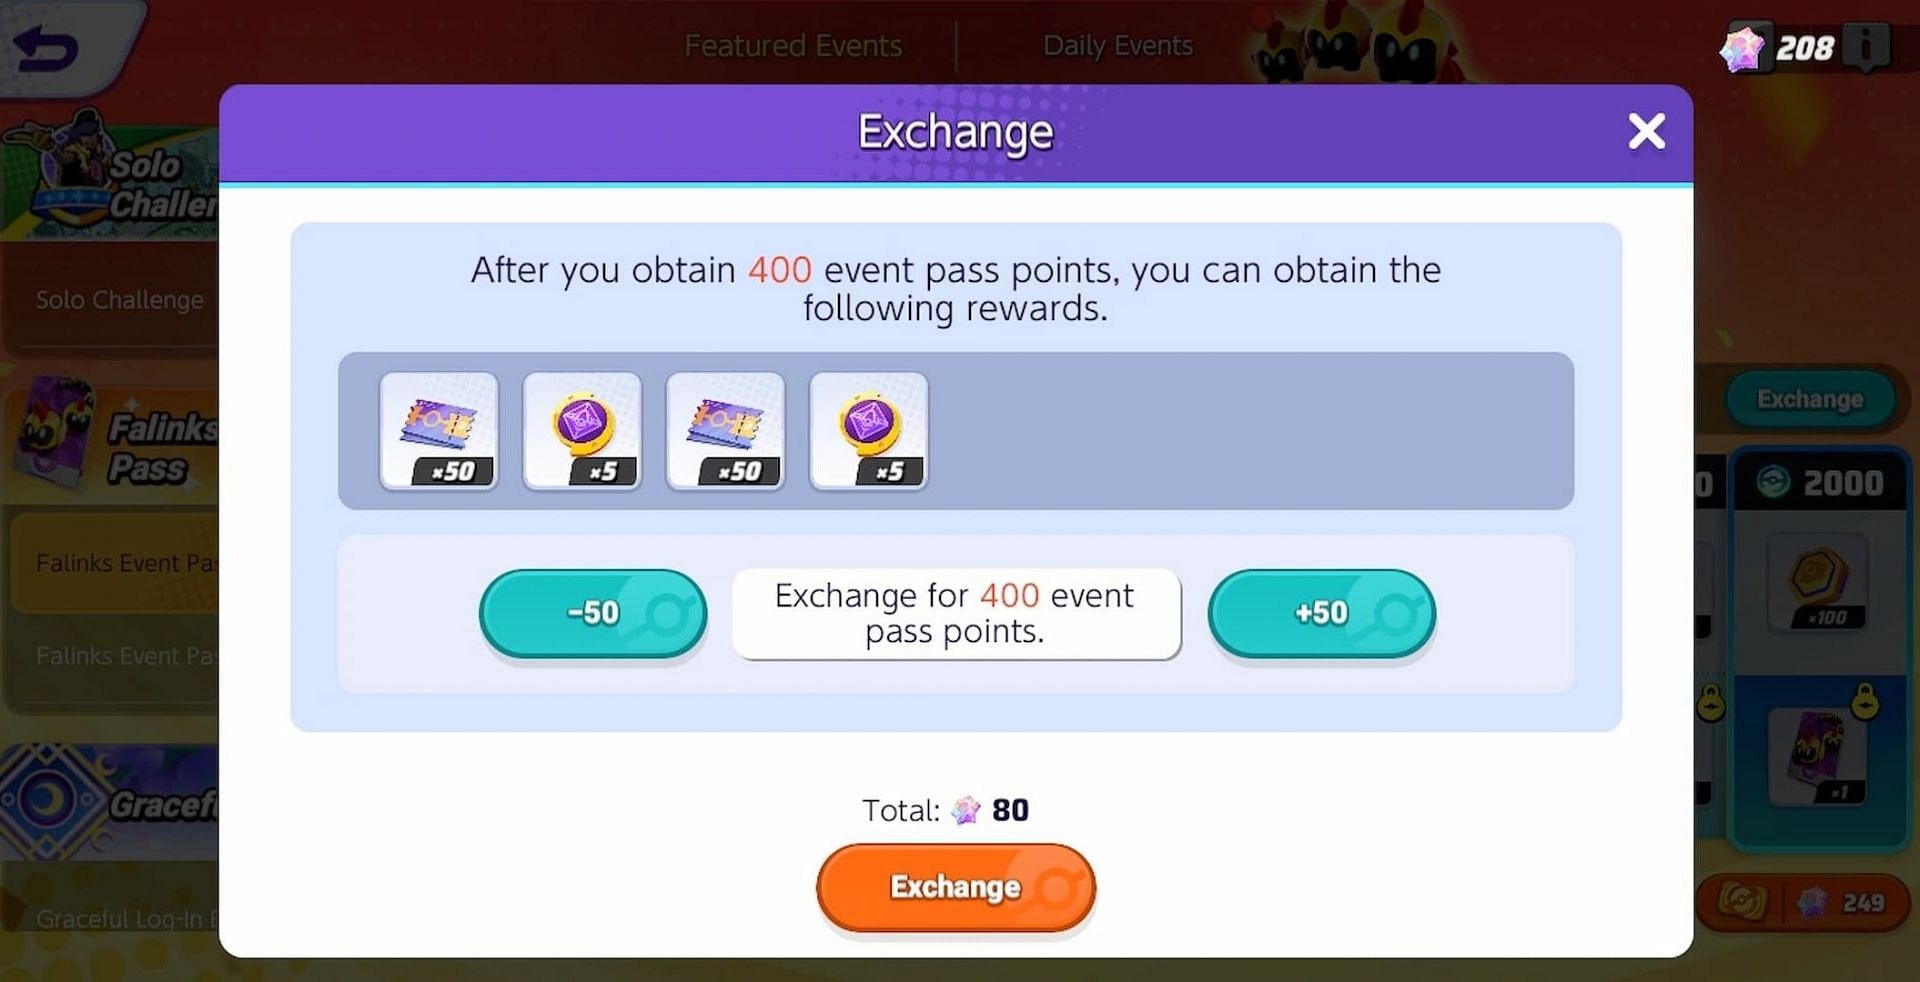 Event Pass Points purchasing screen (Image via The Pokemon Company)